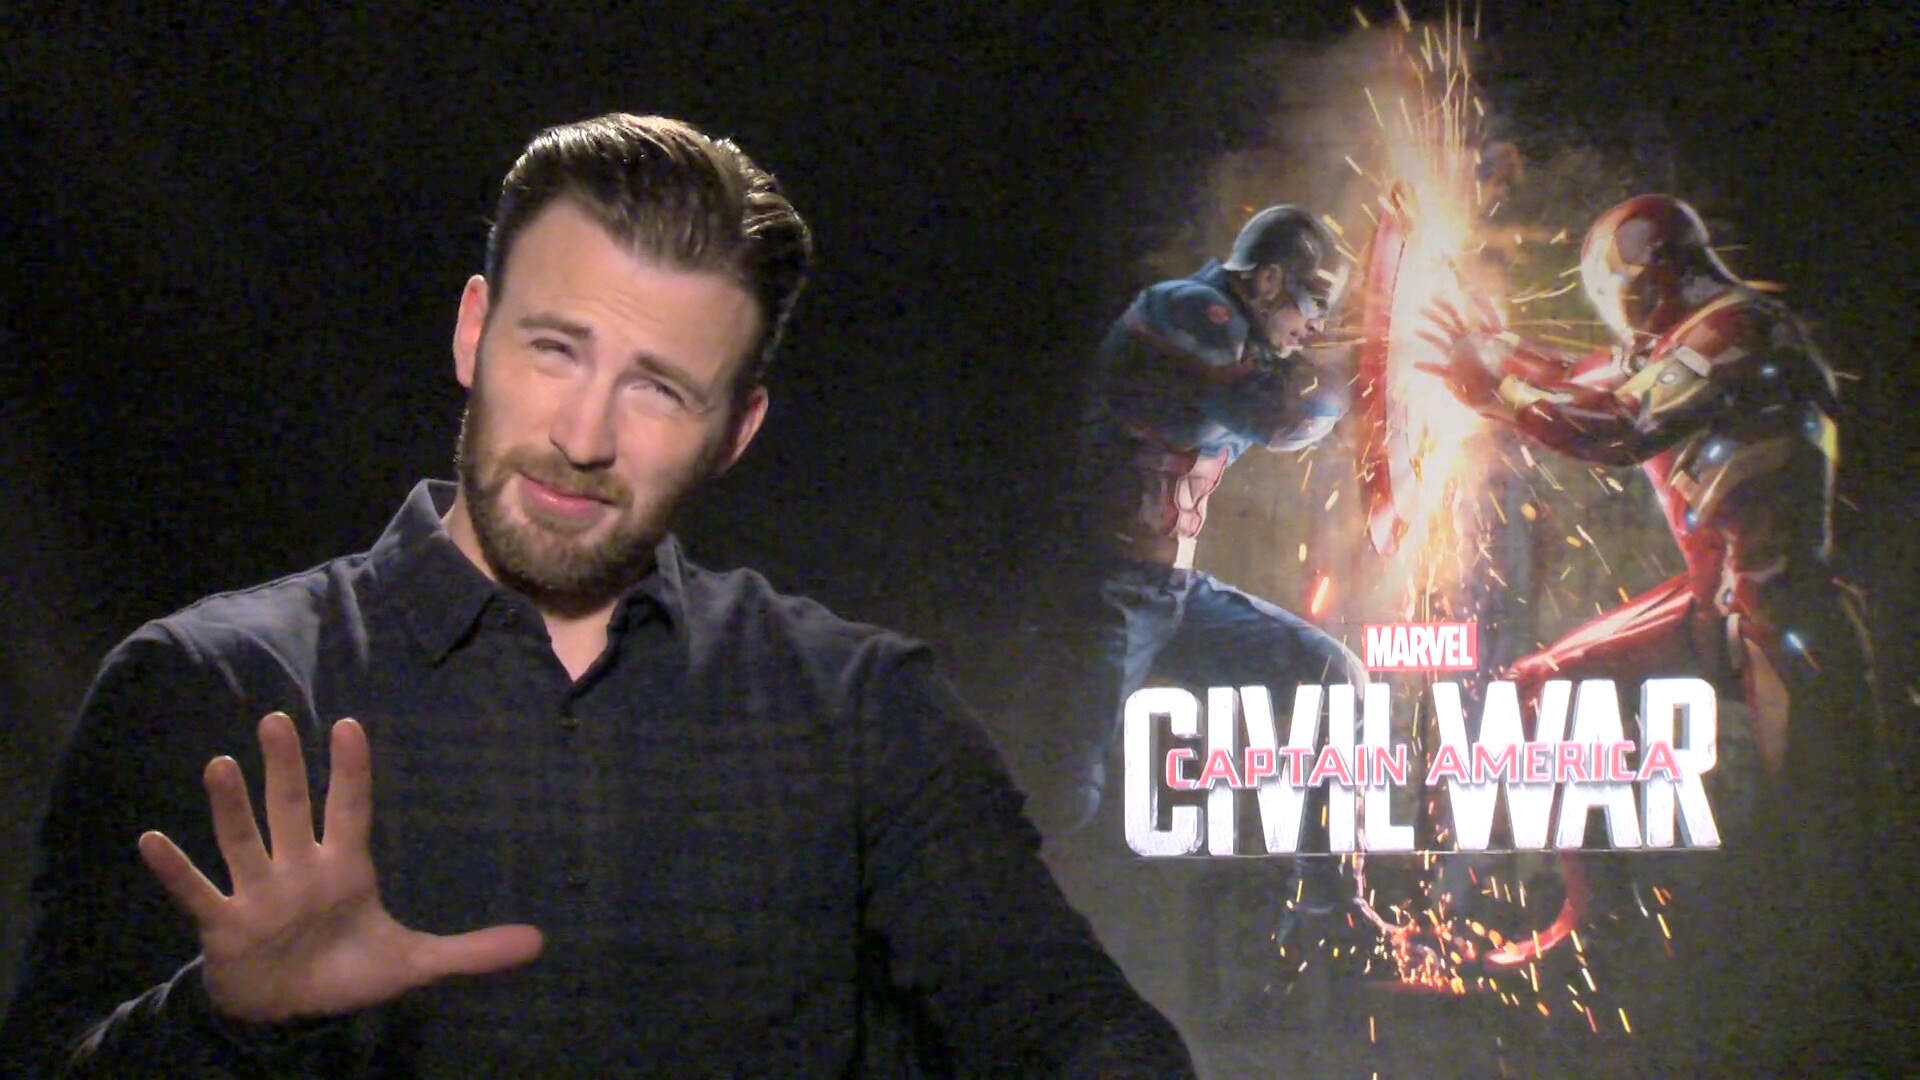 S.H.I.E.L.D. or Shield With Captain America: Civil War's Chris Evans